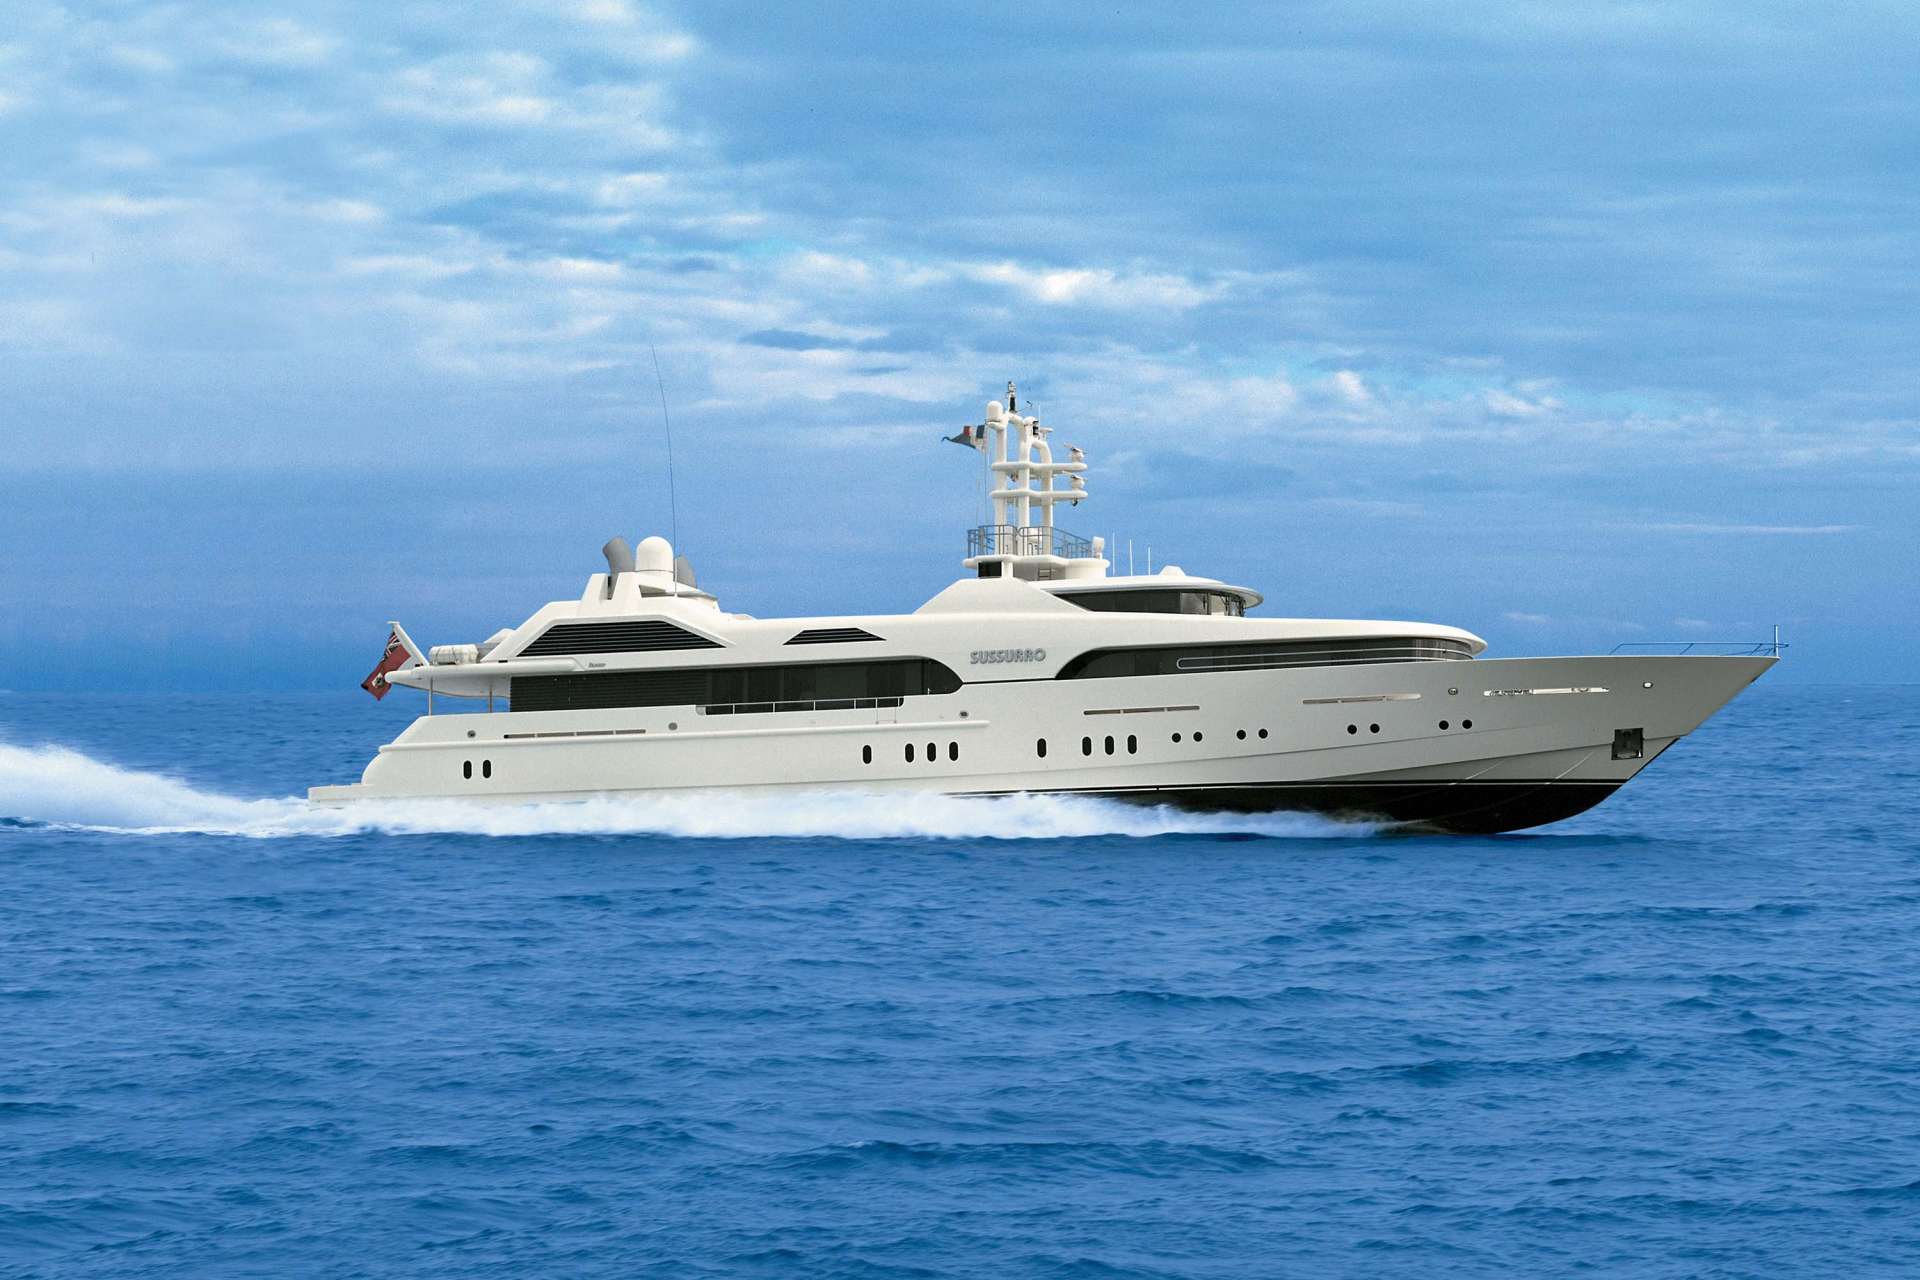 https://www.superyachtfan.com/wp-content/uploads/2020/10/yacht-sussurro-3.jpg